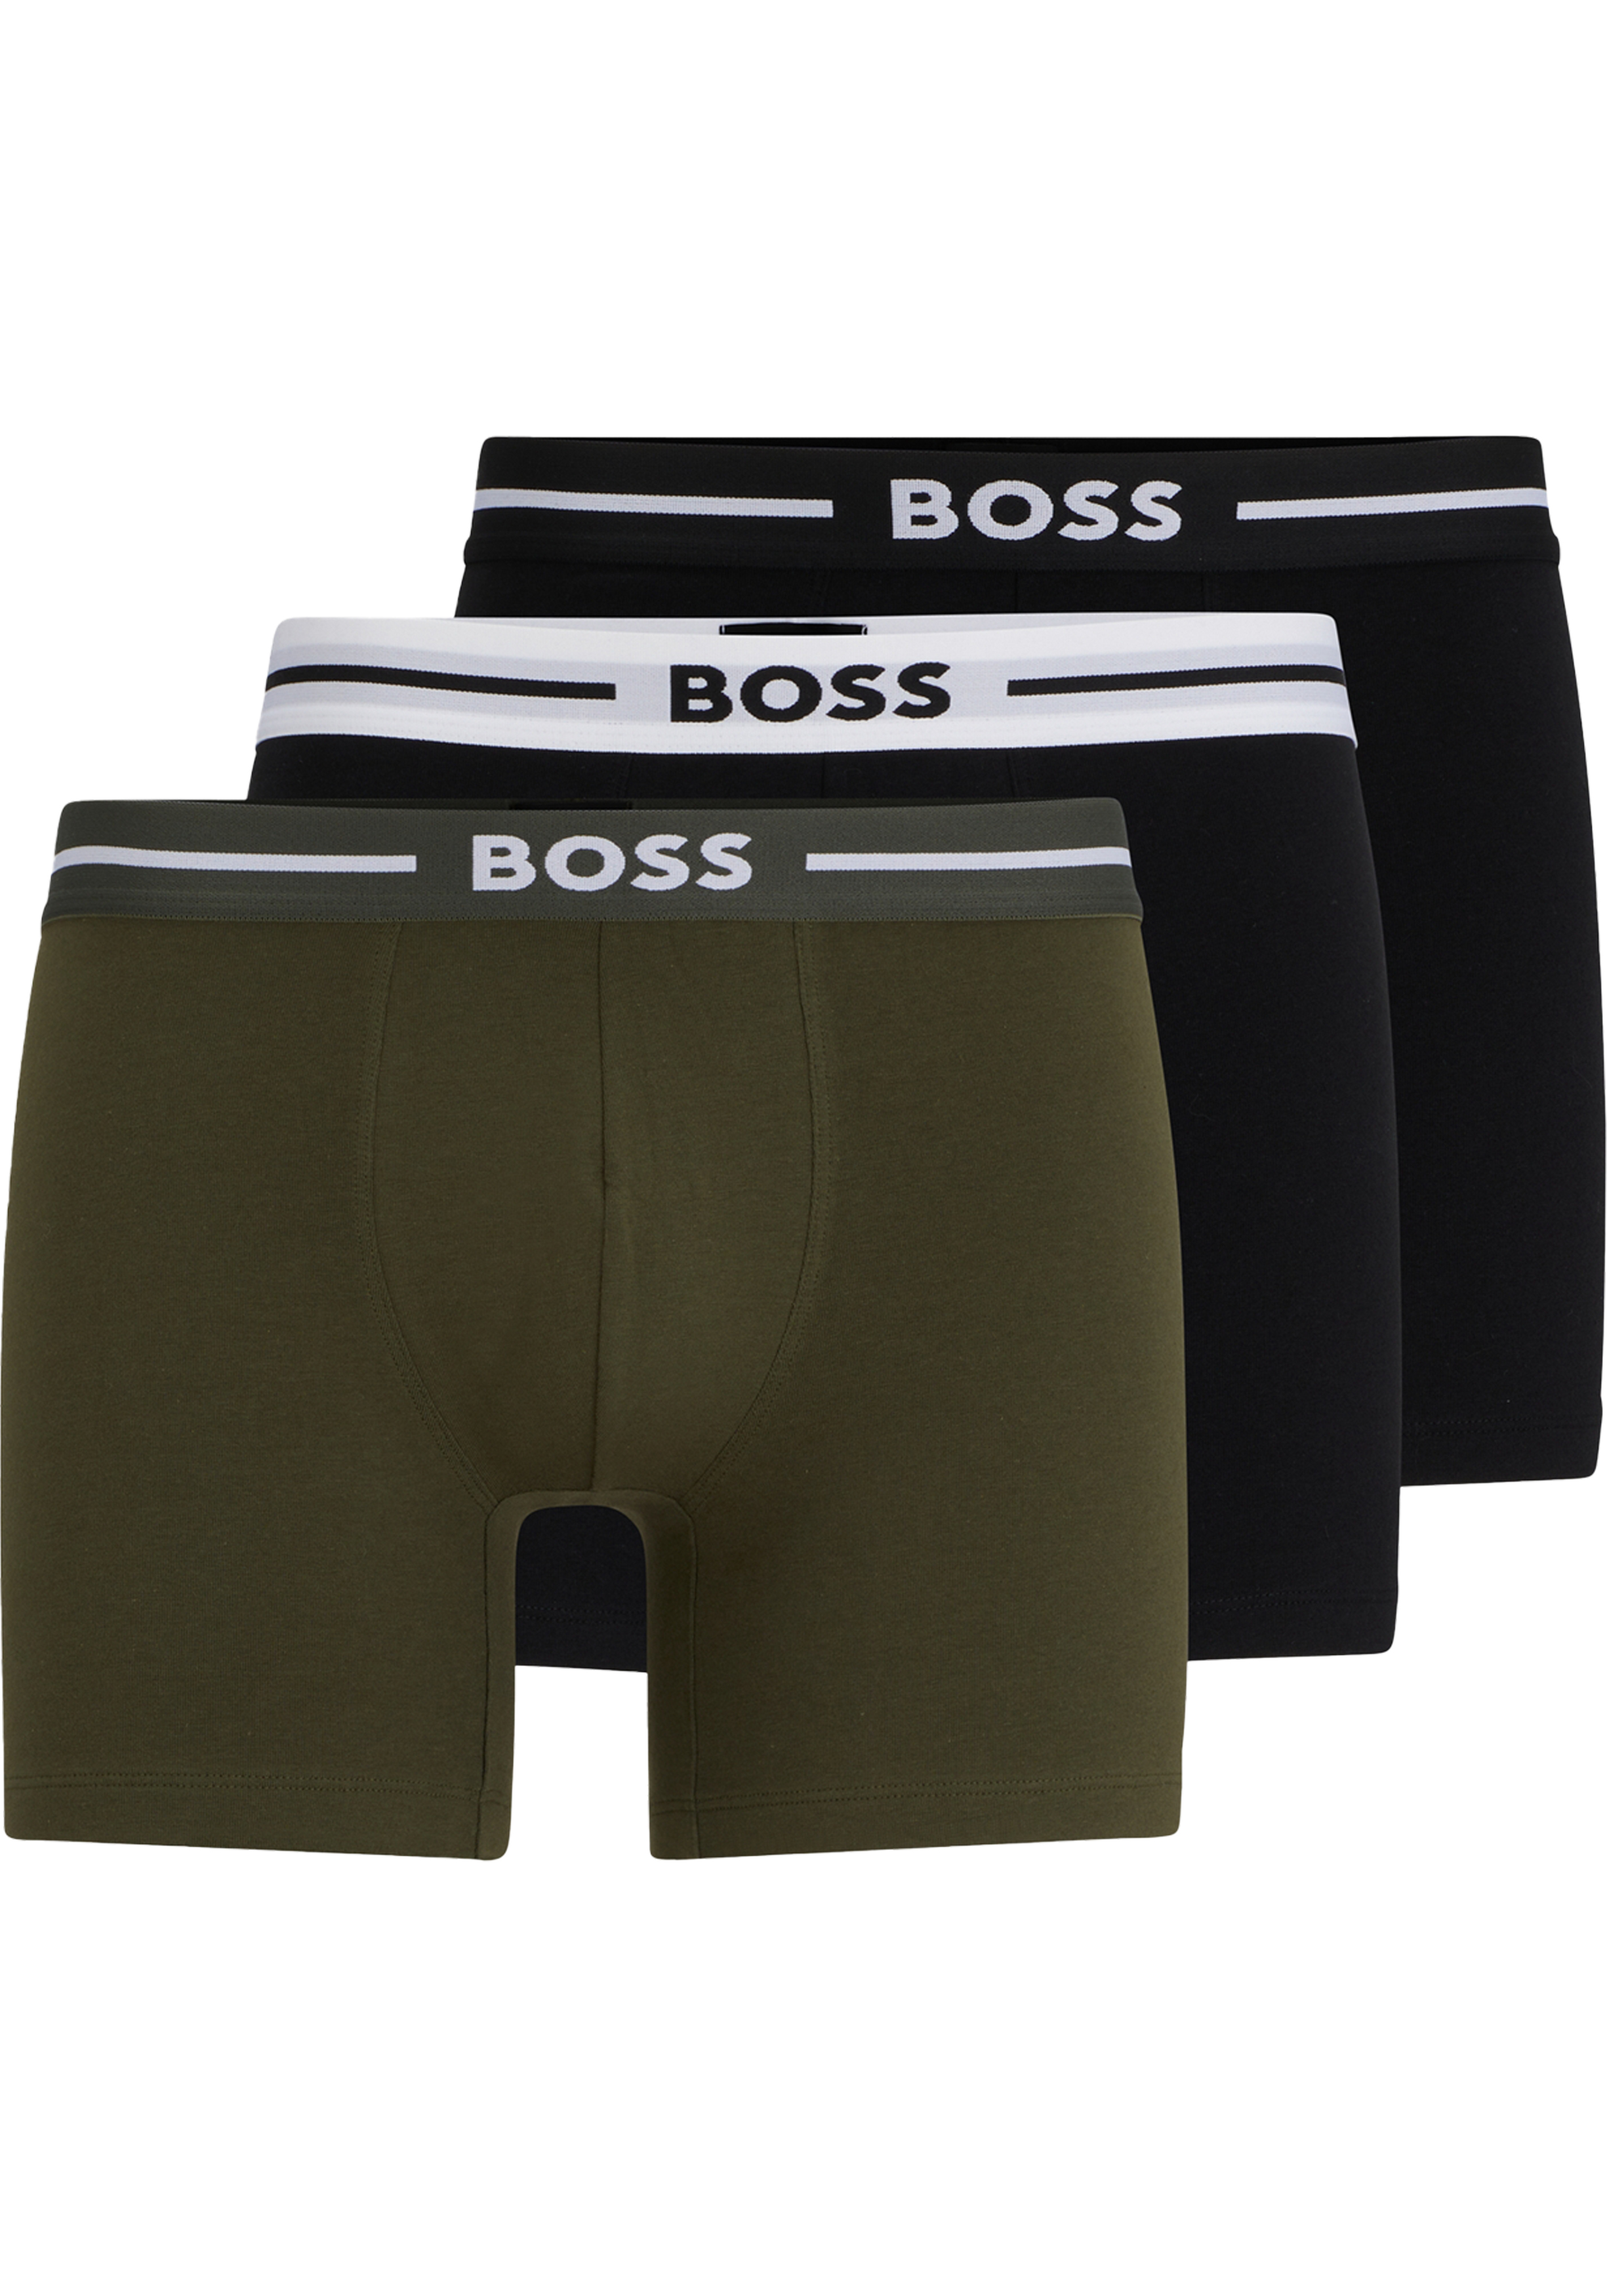 HUGO BOSS Bold boxer briefs (3-pack), heren boxers normale lengte, multicolor